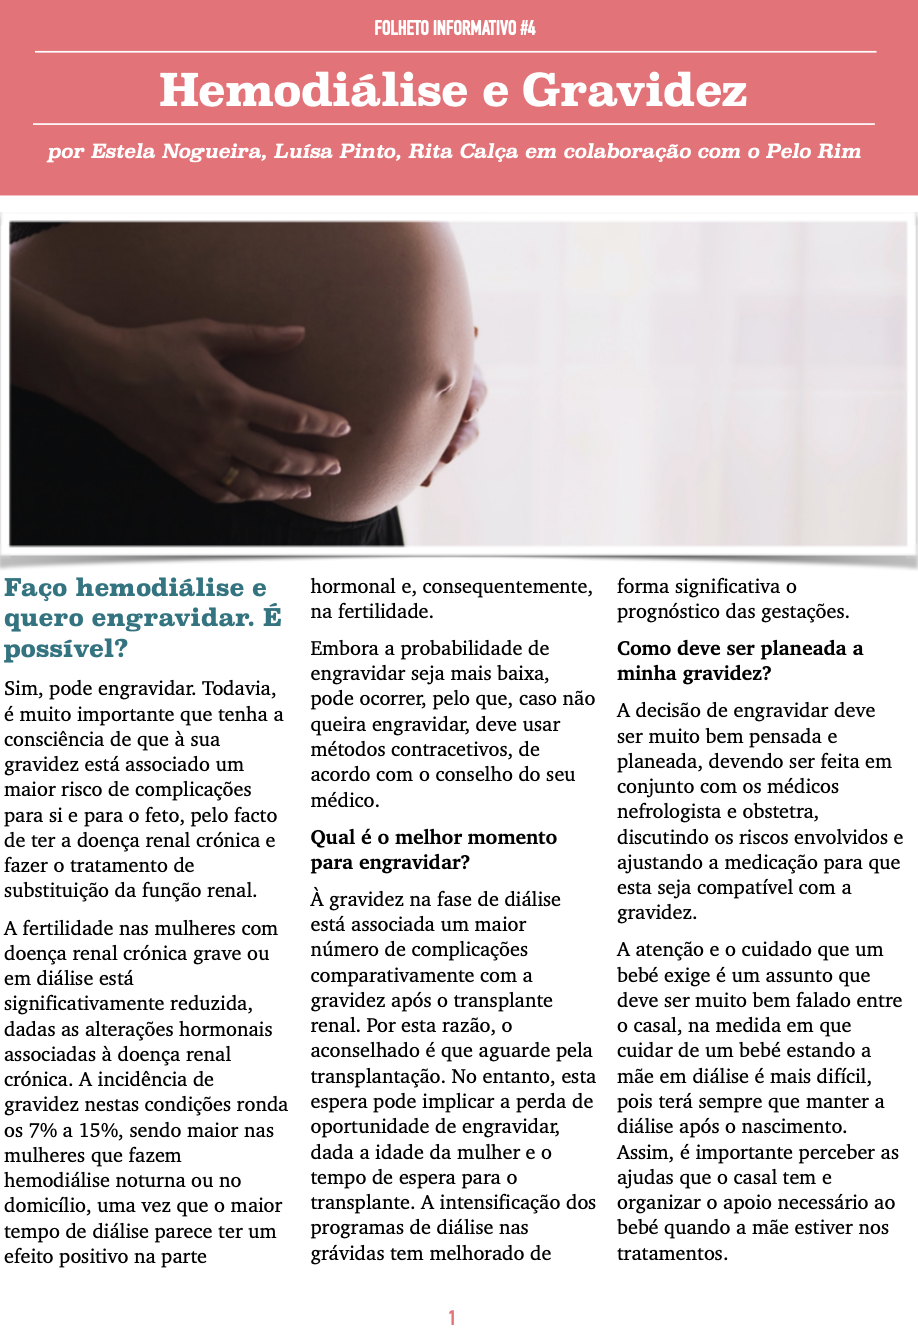 Folheto Informativo 4 - Hemodialise e gravidez_p1.png